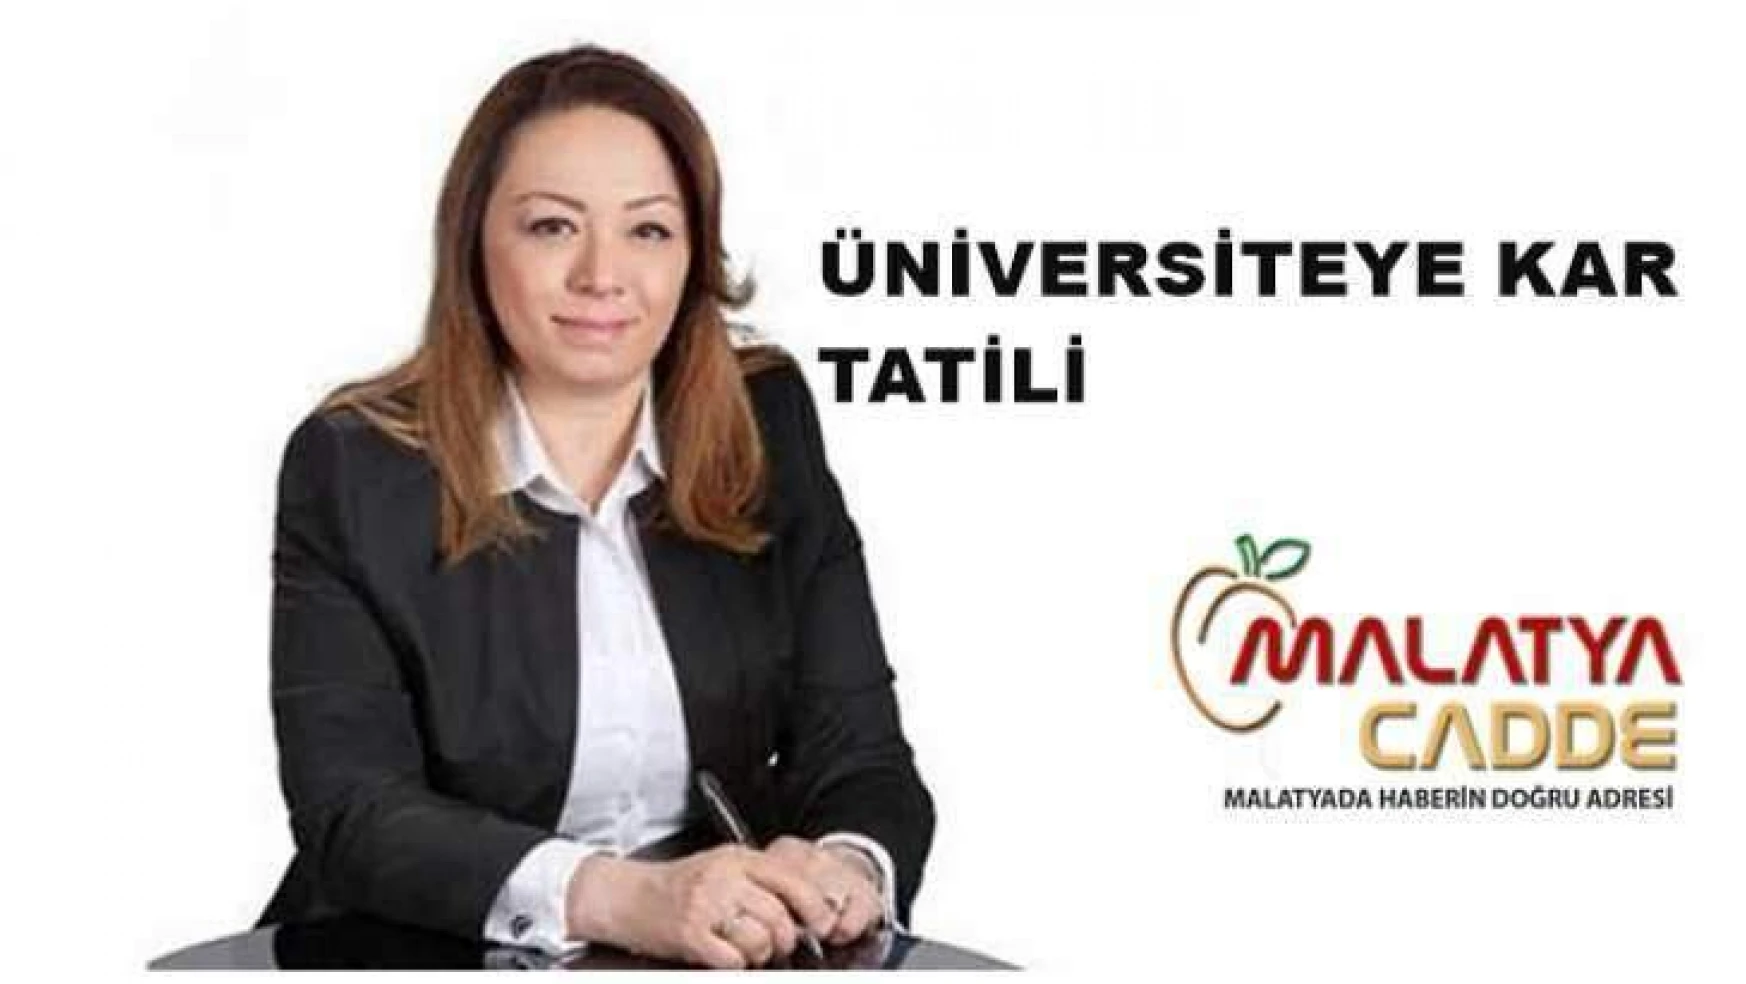 Malatya Turgut Özal Üniversitesine Kar Tatili